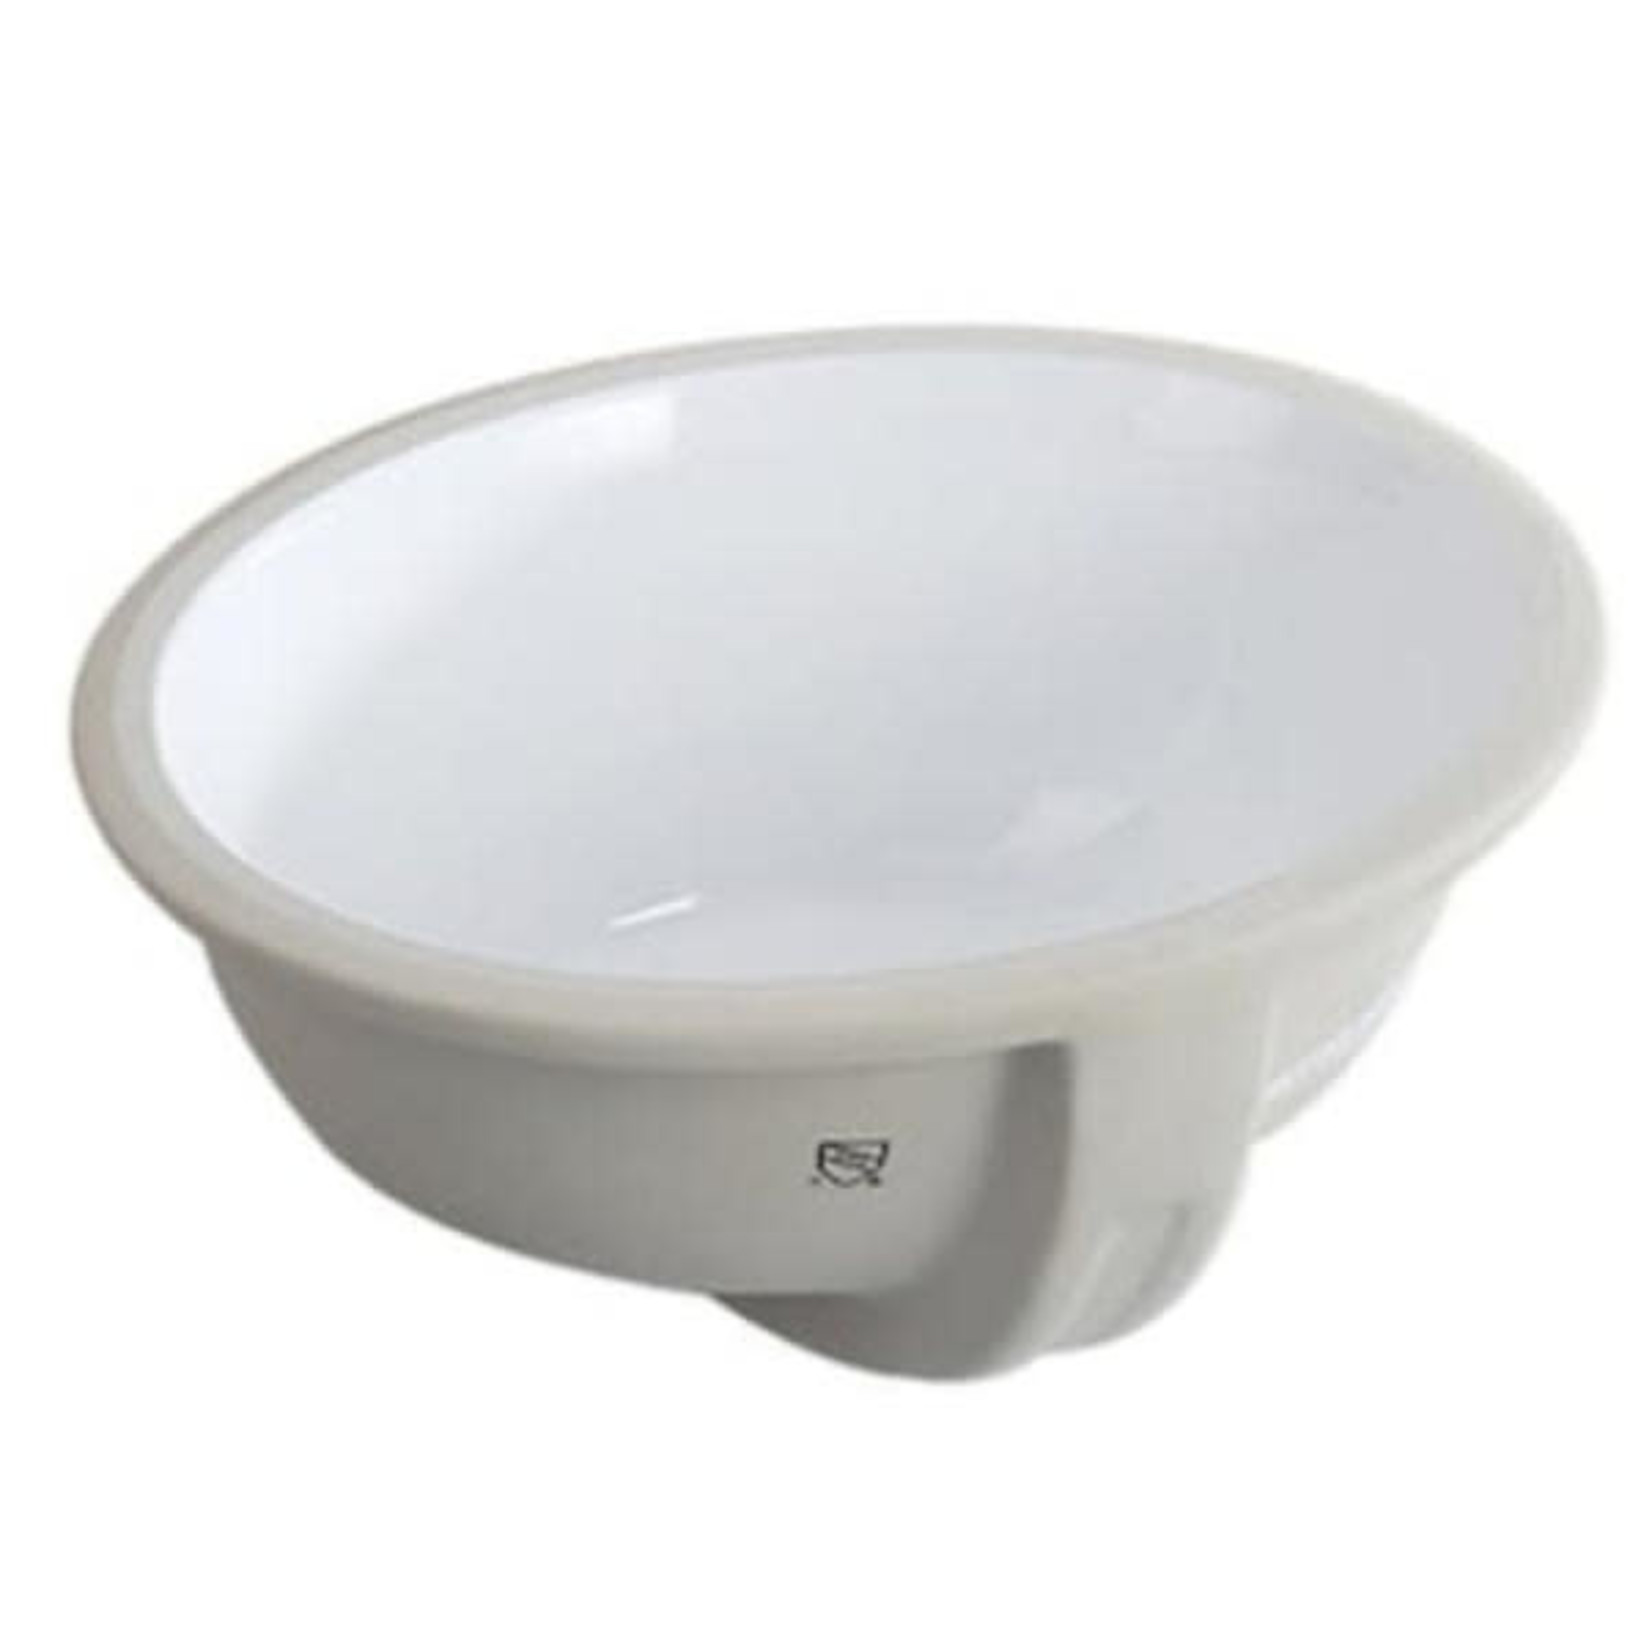 12480 Topcraft White Ceramic Drop-in Oval Bathroom Sink